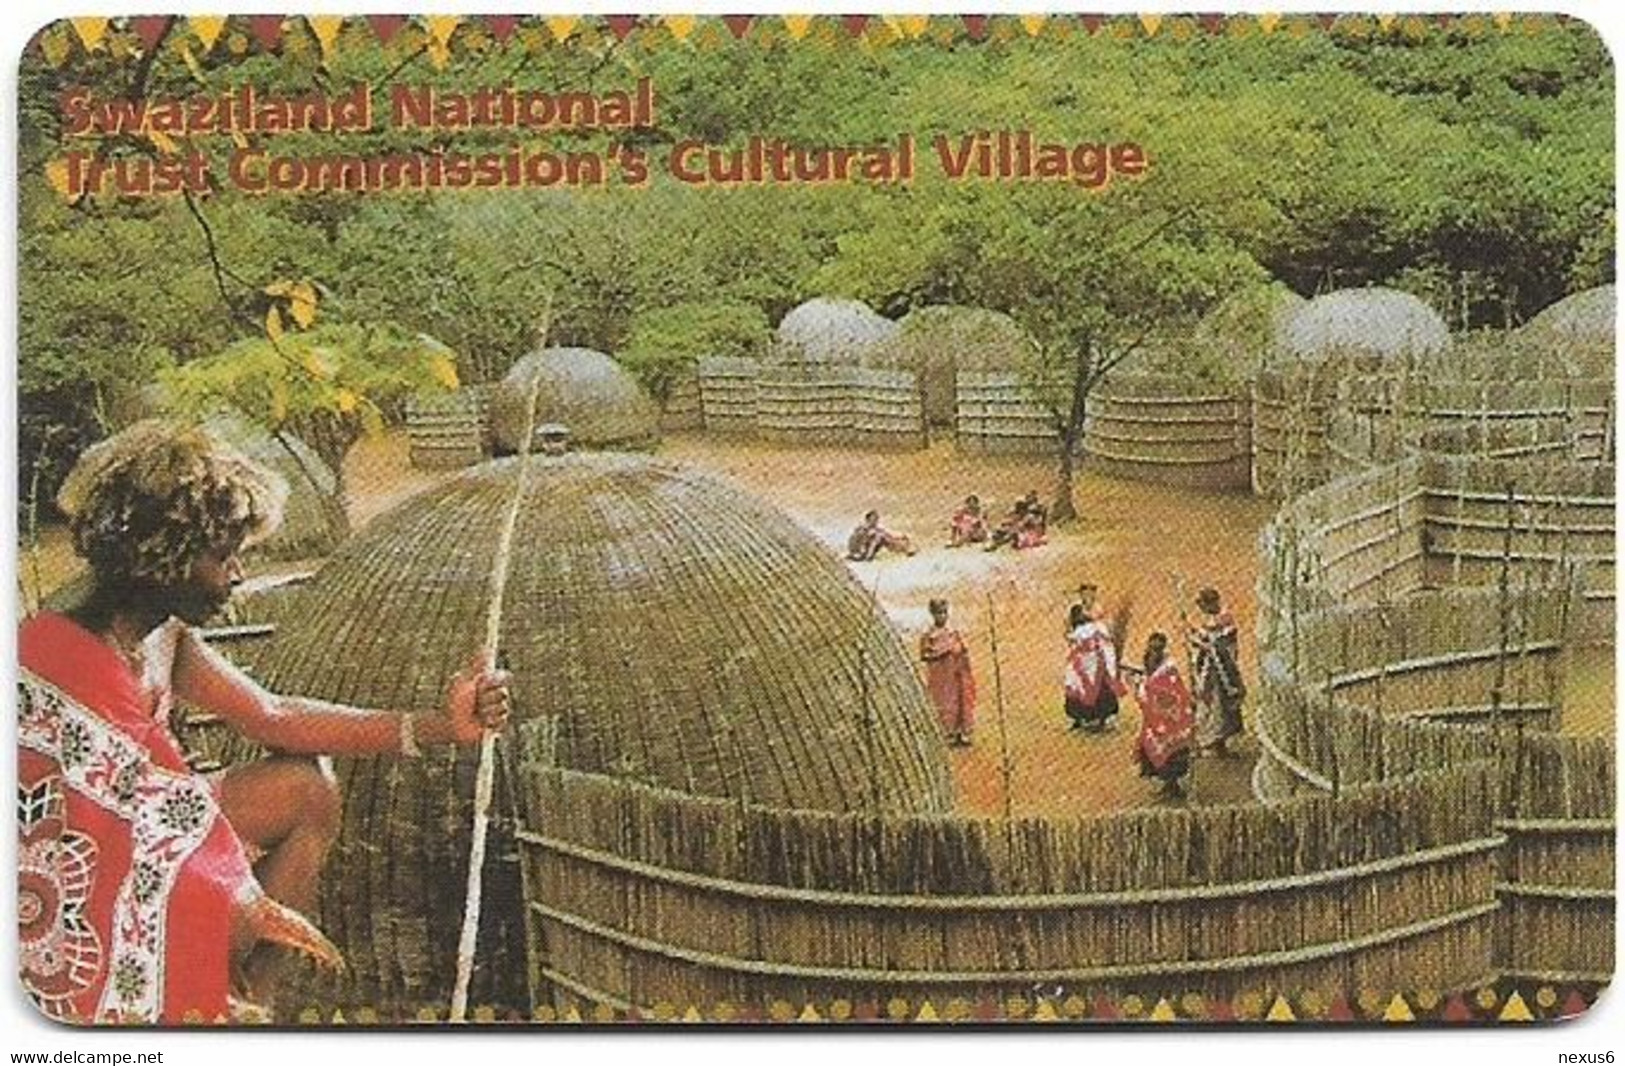 Swaziland - Swazitelecom - Cultural Village, Chip Solaic 03, Exp.03.2001, 20E, Used - Swasiland